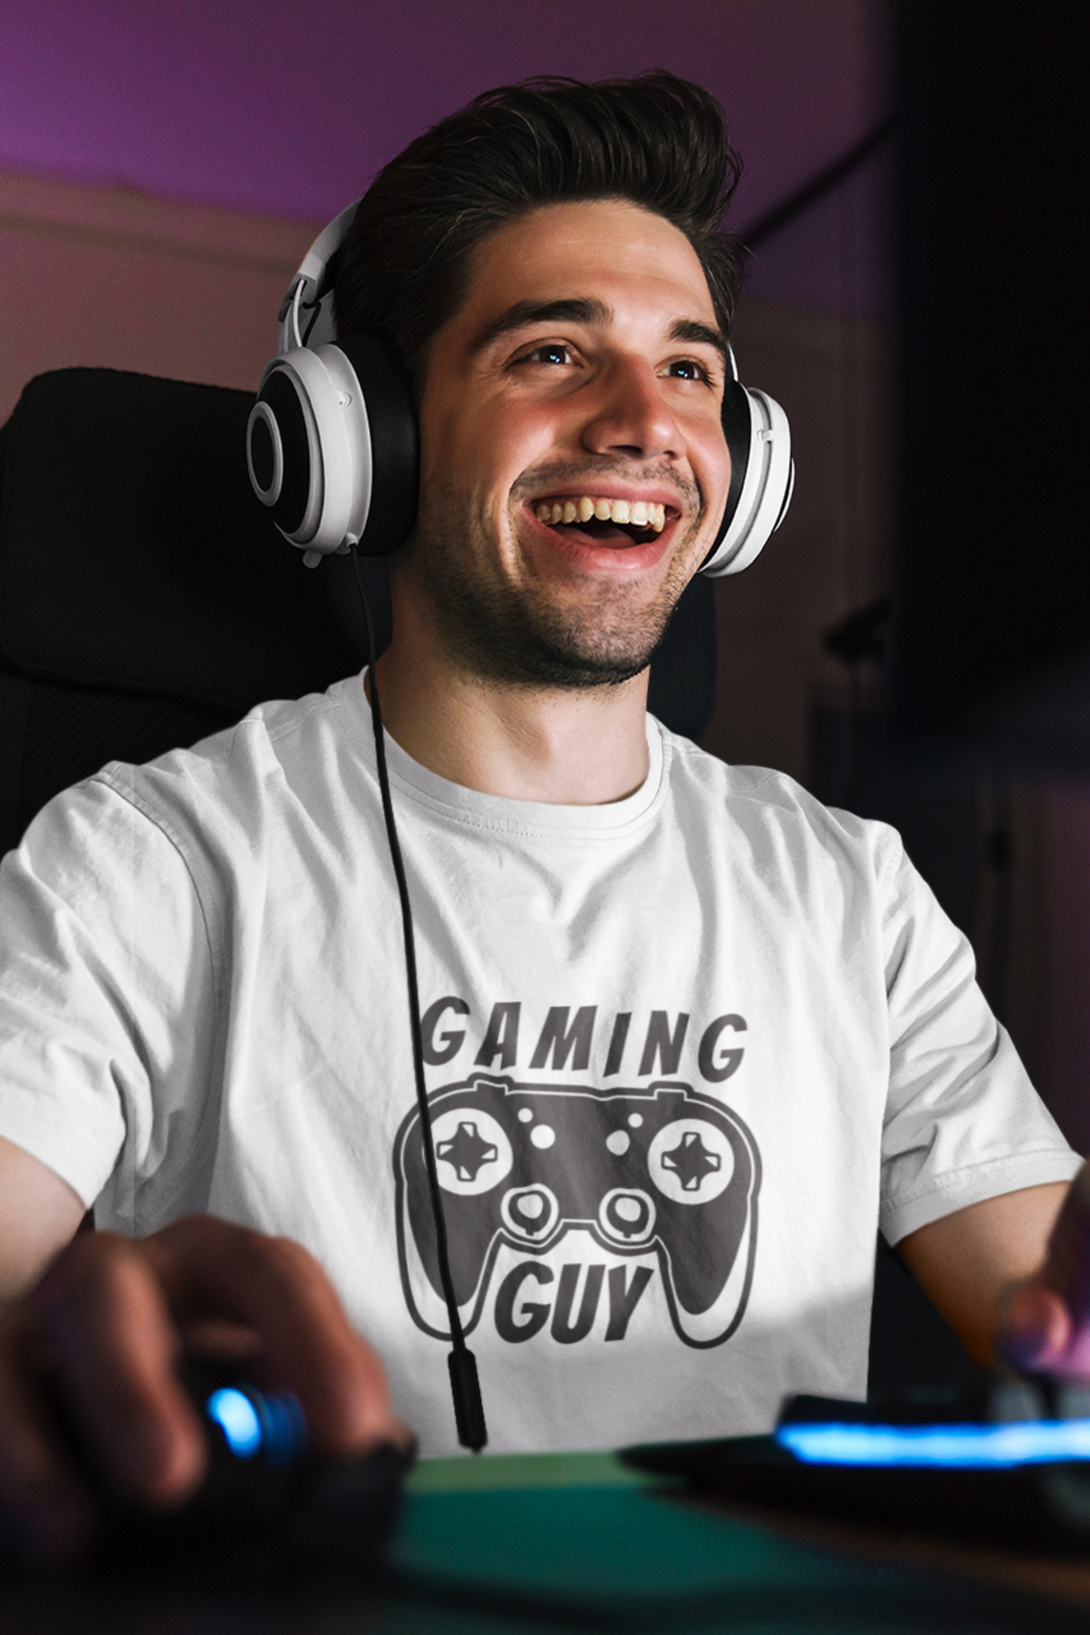 Gaming Guy Printed T-Shirt For Men - WowWaves - 7